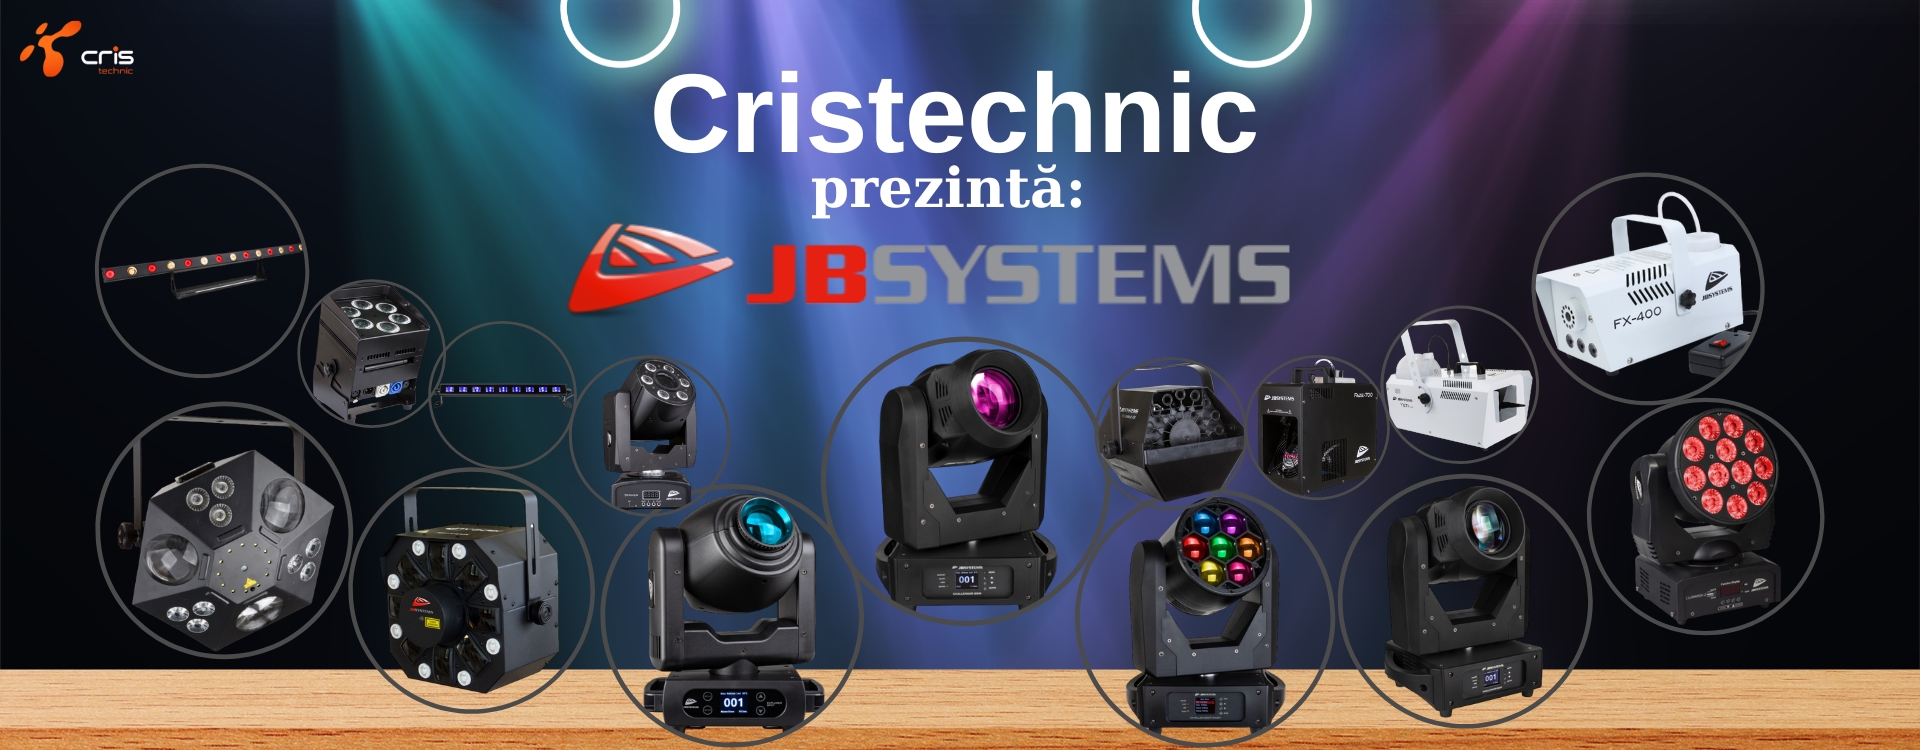 Cristechnic prezinta JB Systems